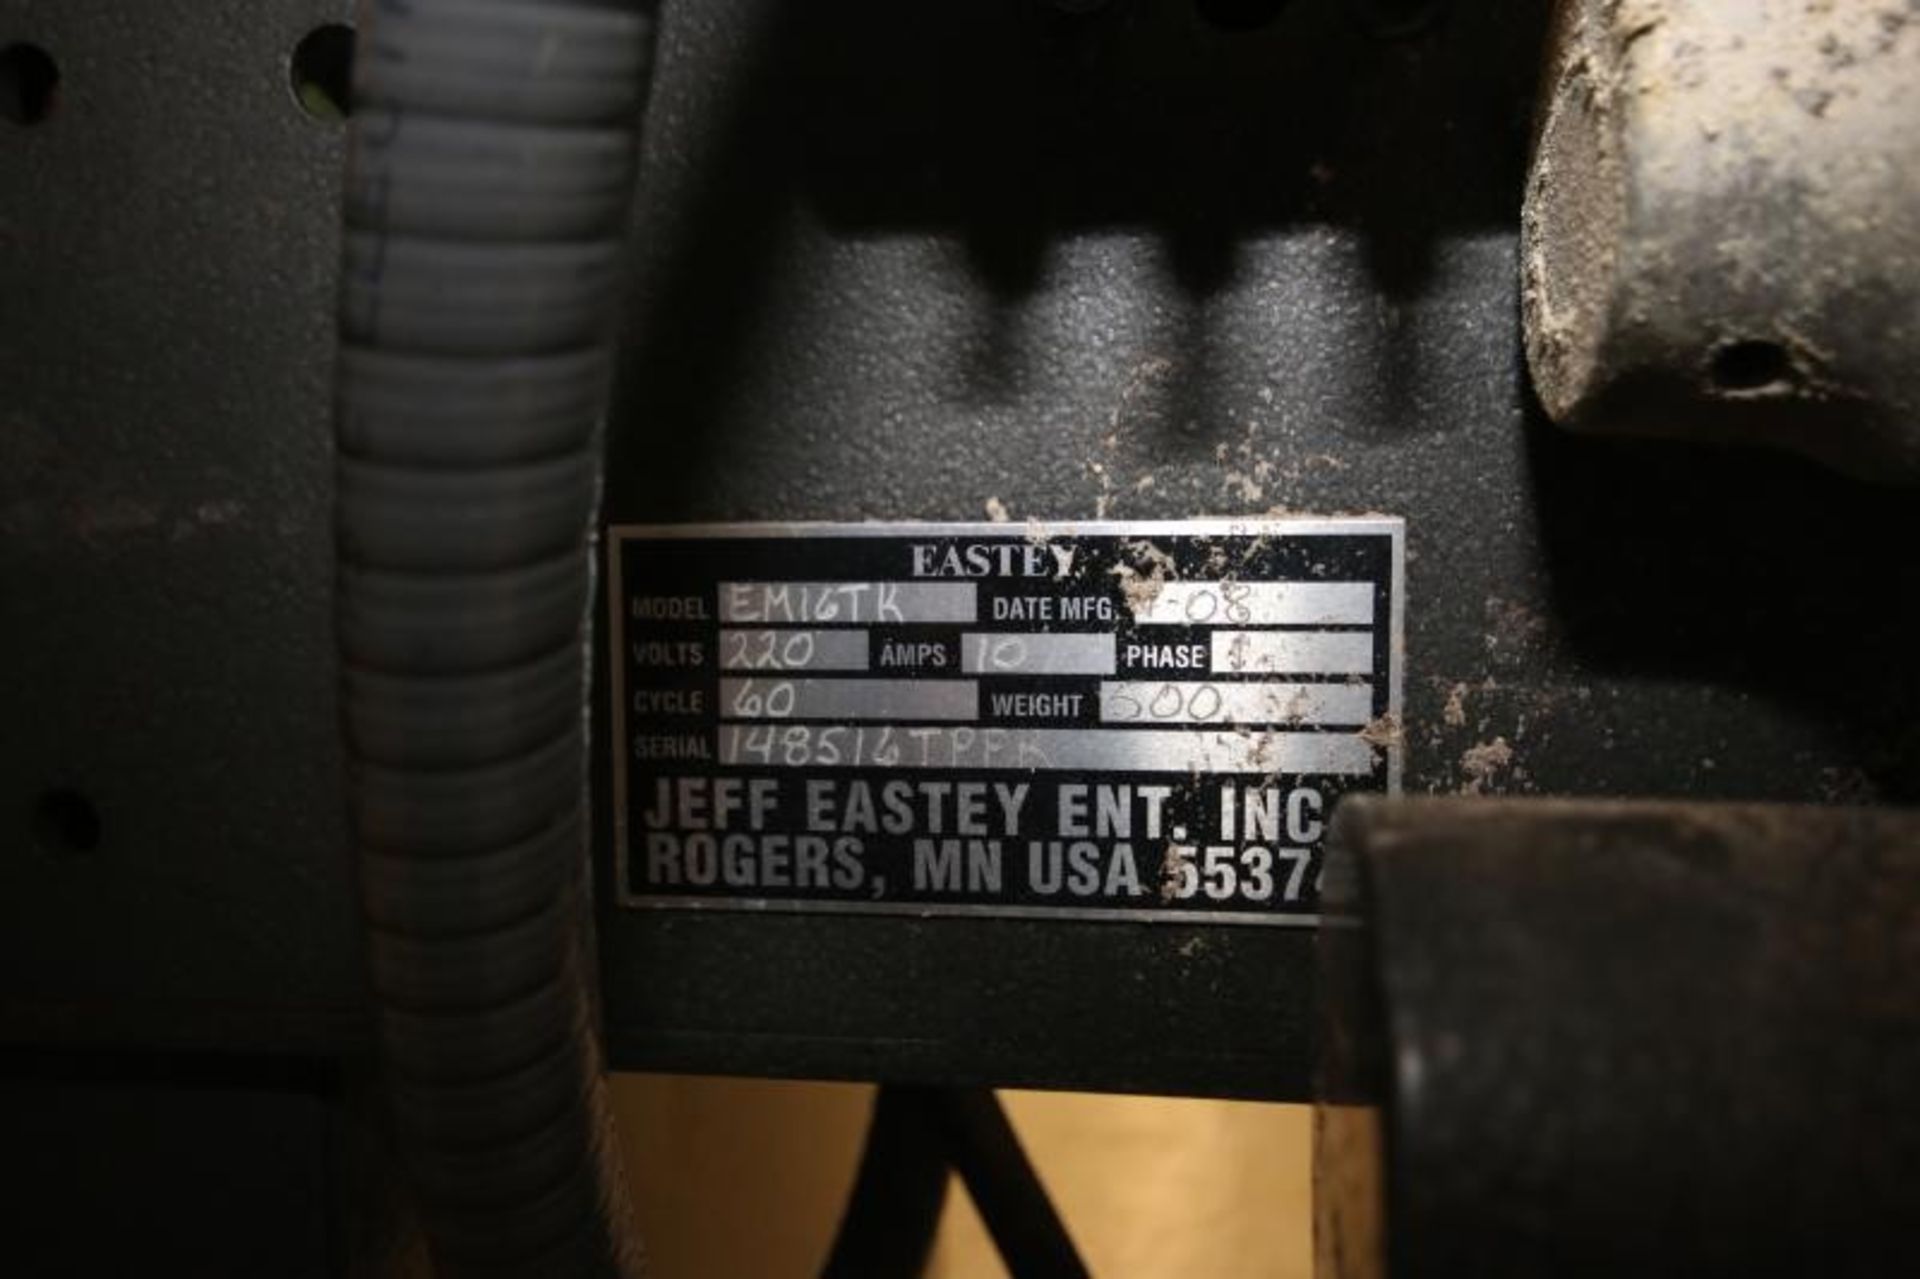 Eastley L Bar Sealer, Model EM16TK, SN 148516TPPK, 16" W x 20" L Semi Automatic, 220V (INV#81409)( - Image 2 of 5